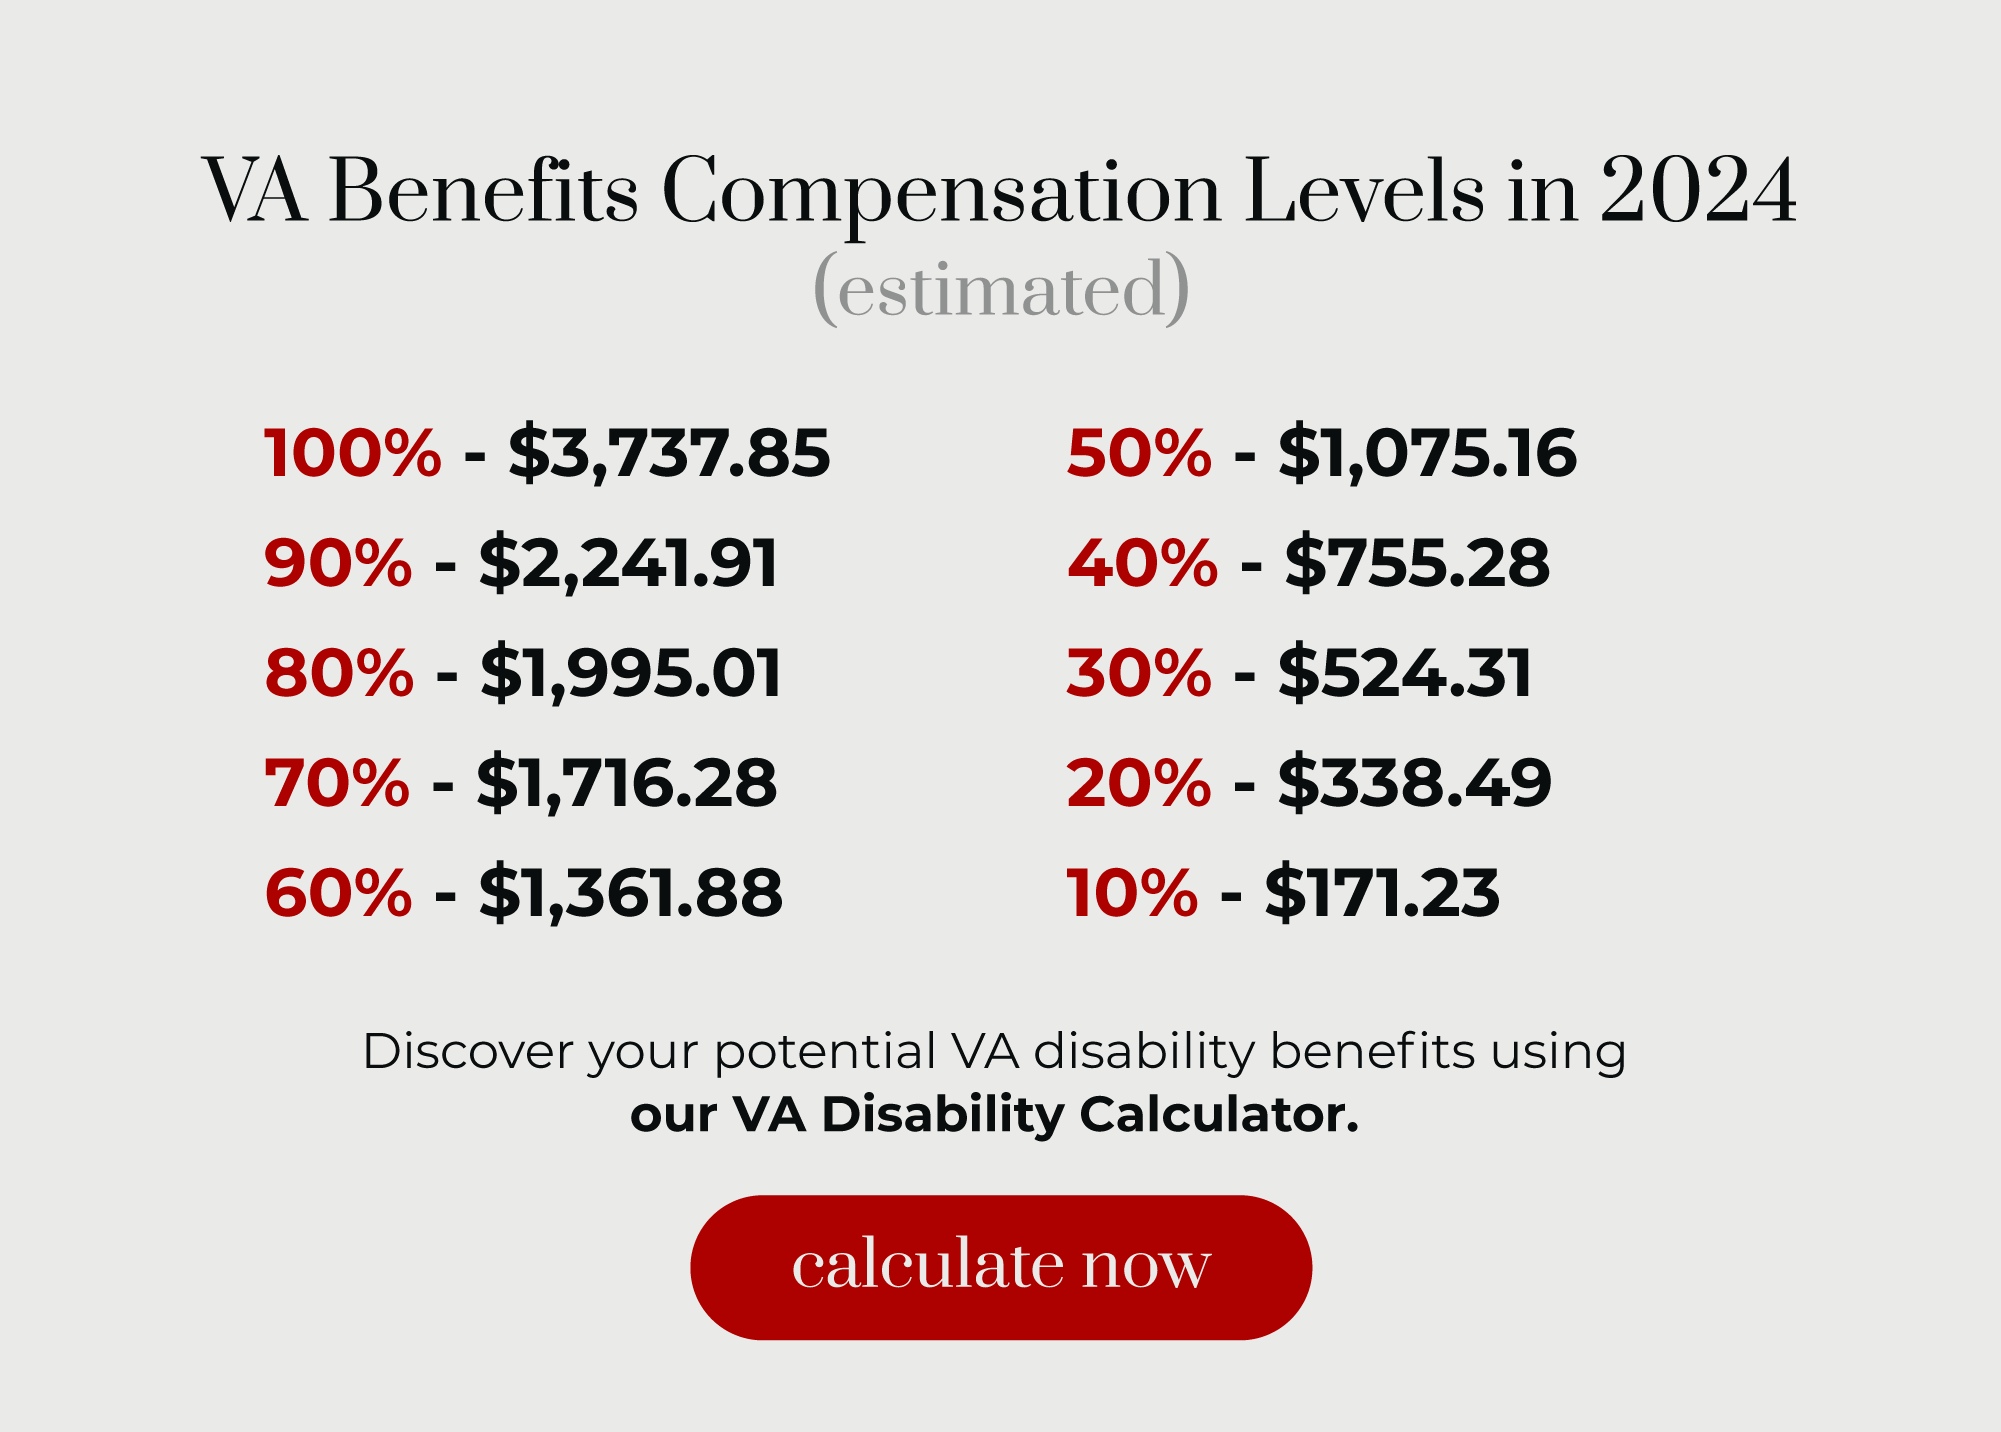 VA benefits compensation levels in 2024